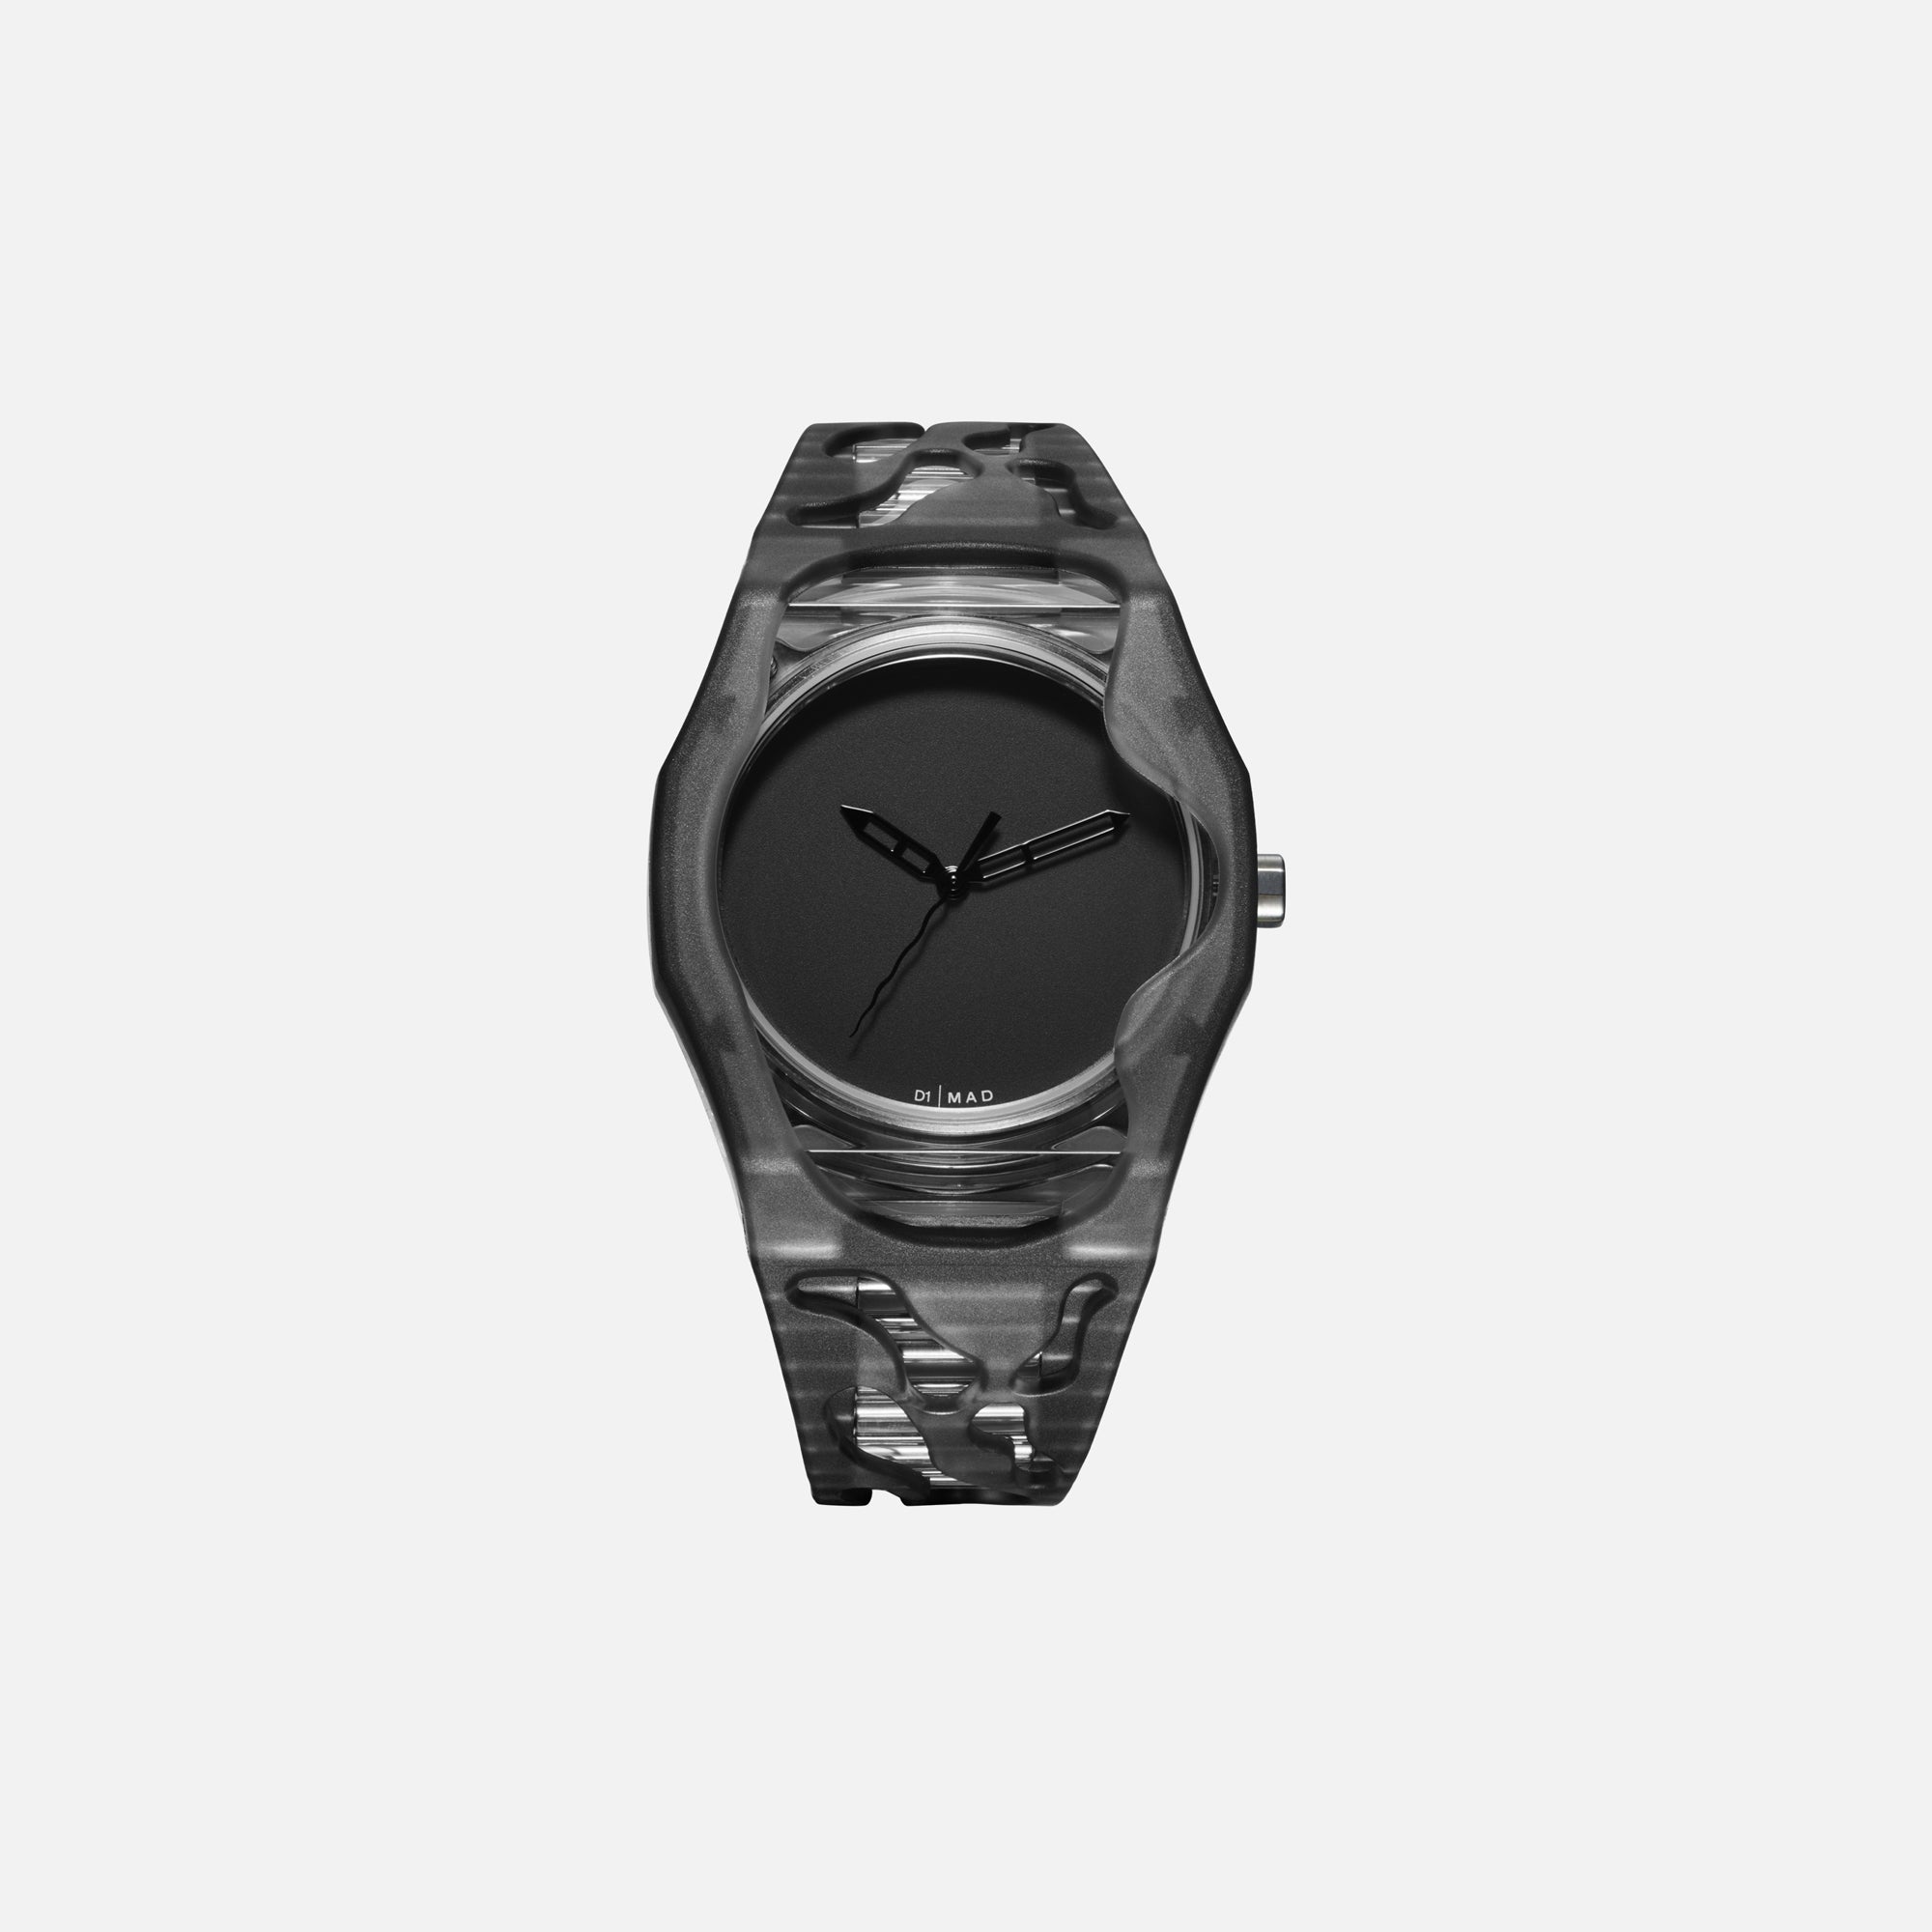 Cartier unveils its first concept watch